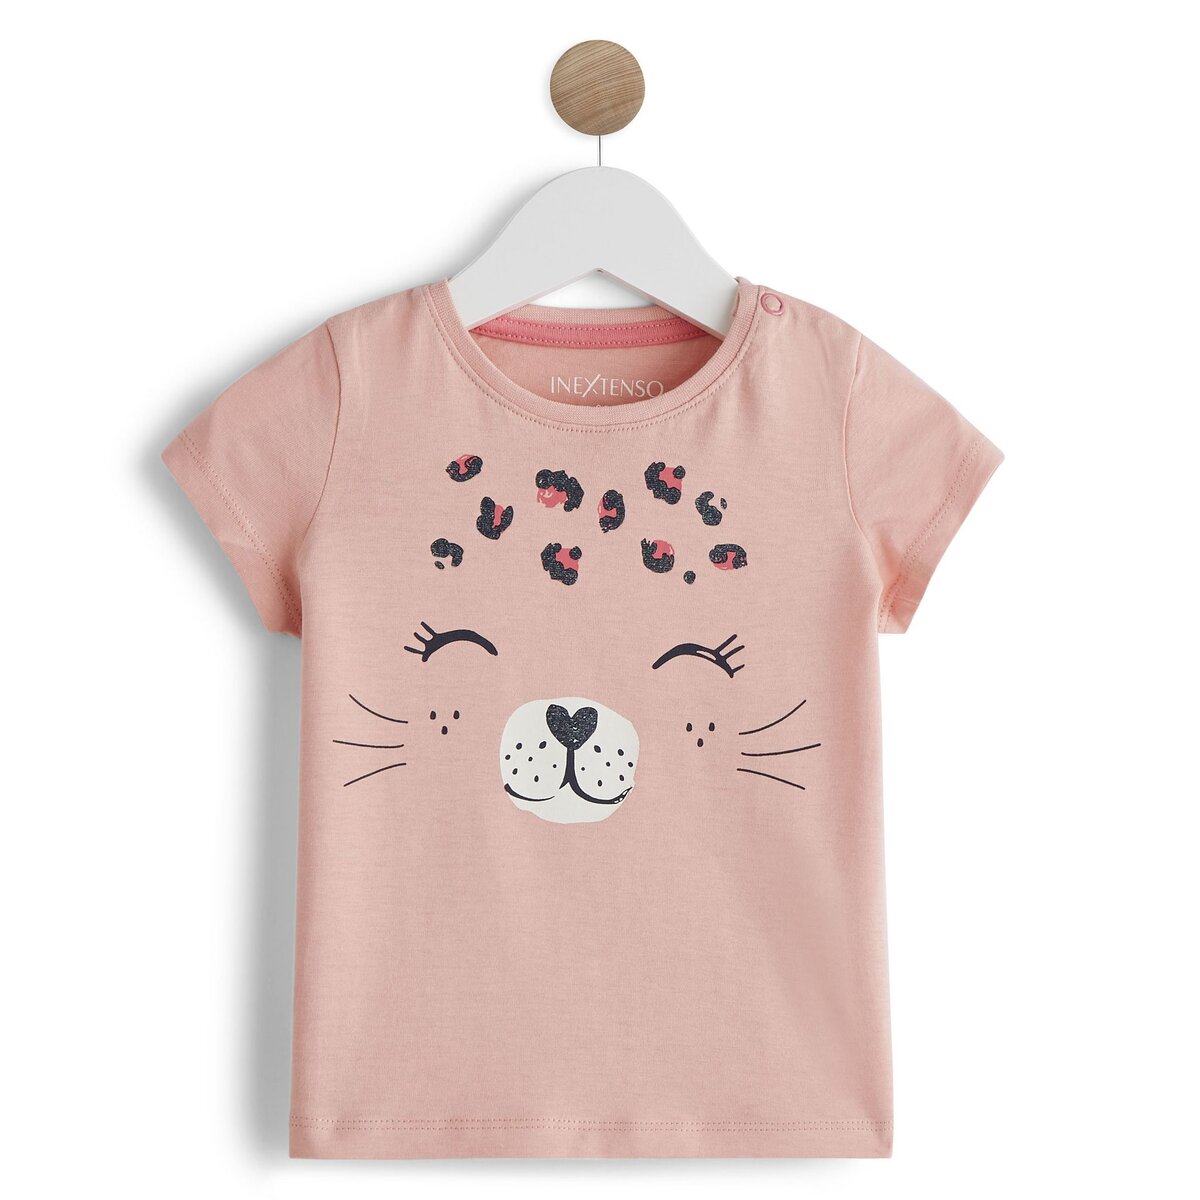 IN EXTENSO T-shirt manches courtes chat bébé fille